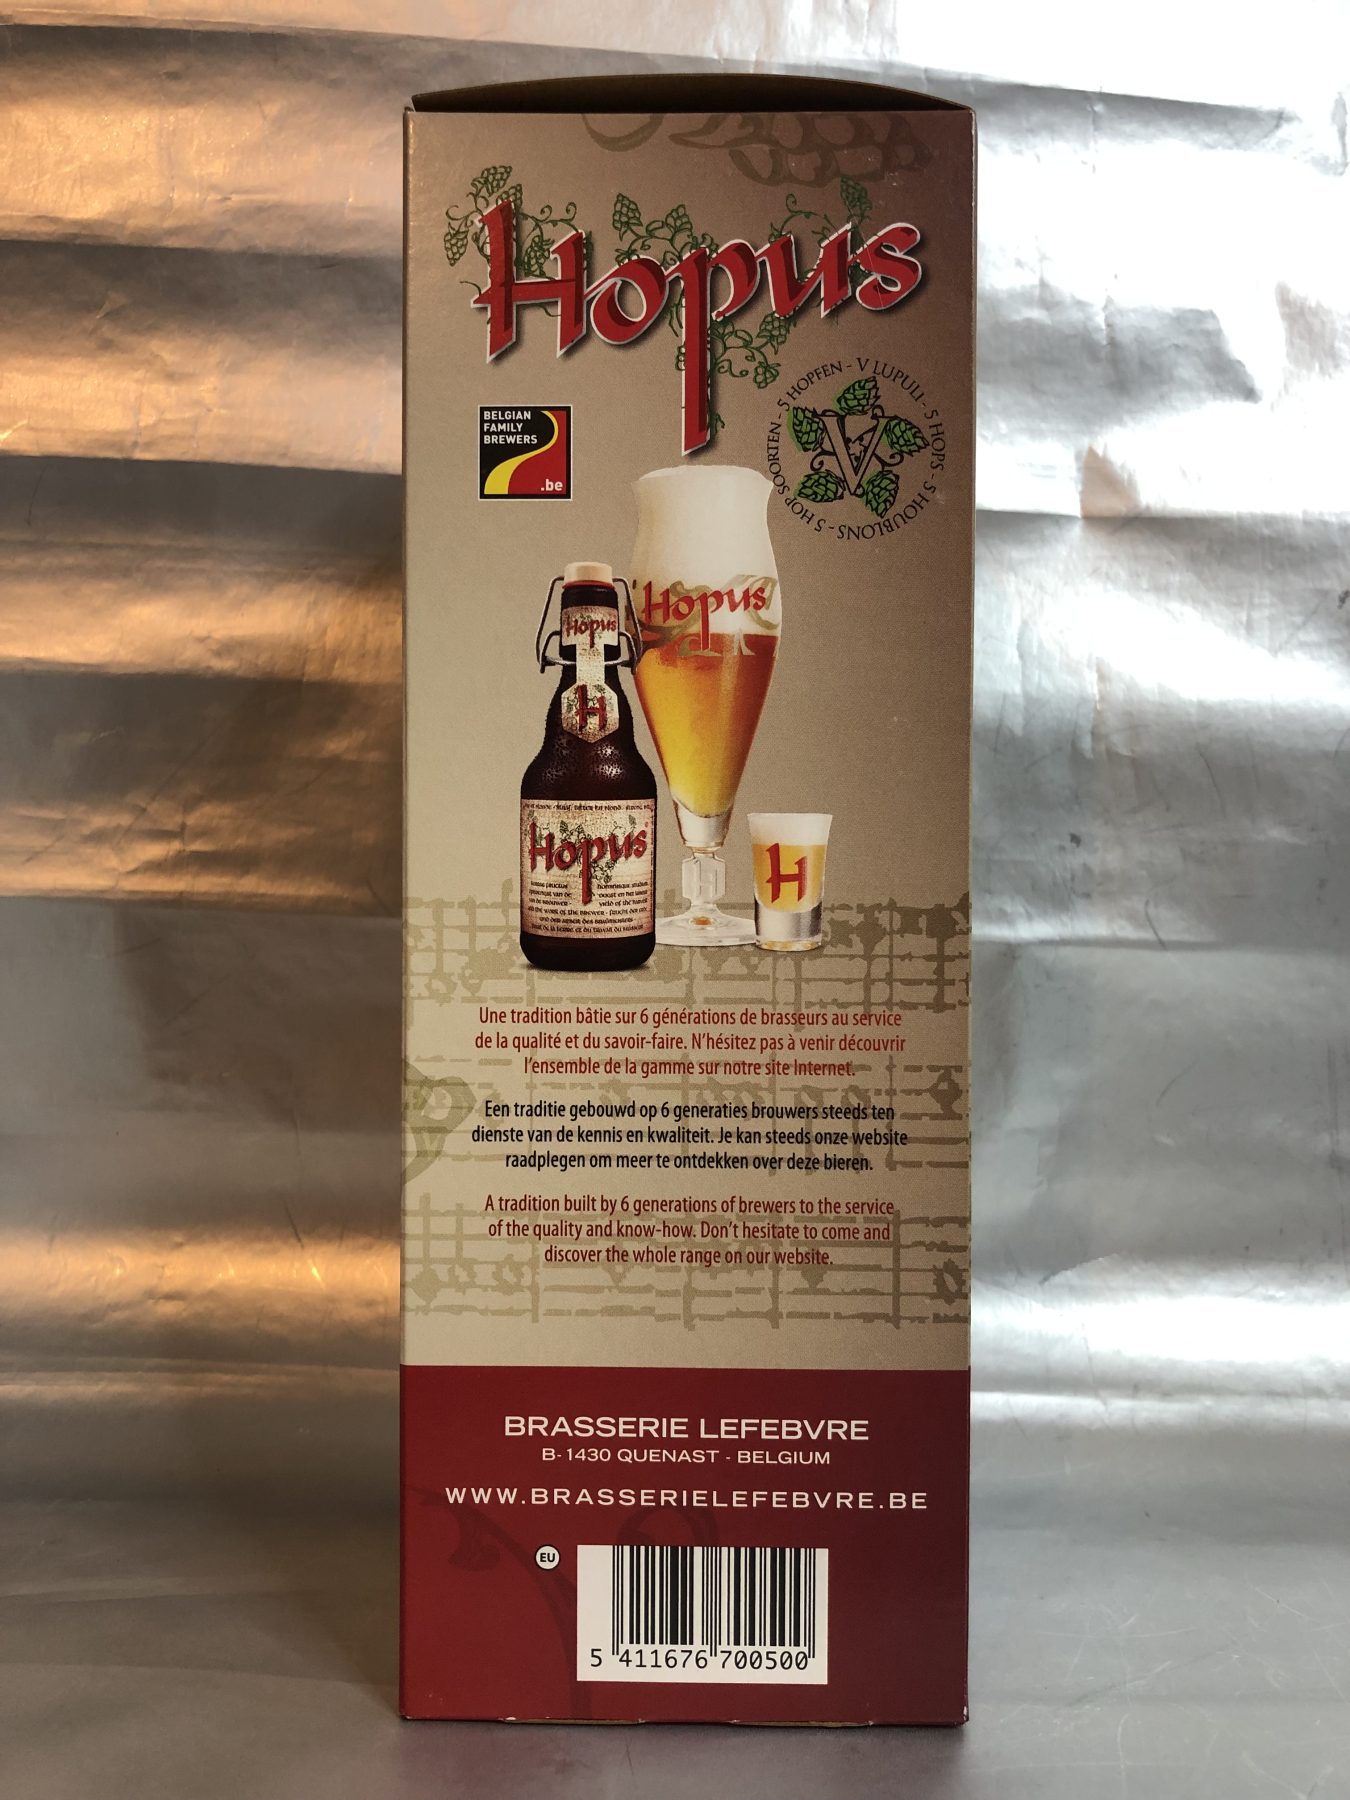 Hopus Blond beer glass